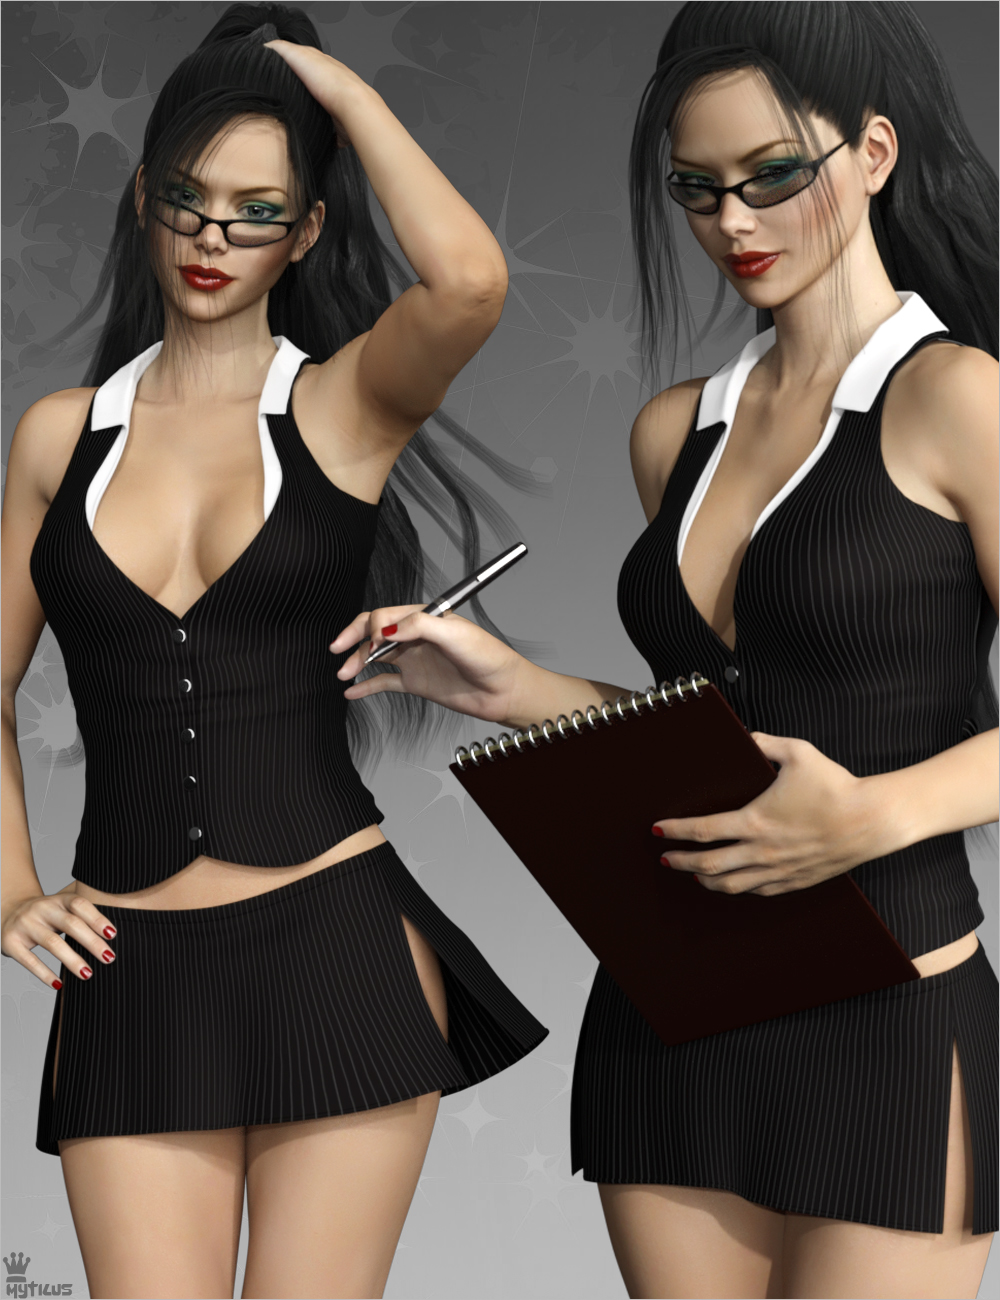 Secretary for Genesis 3 Female(s) by: Mytilus, 3D Models by Daz 3D